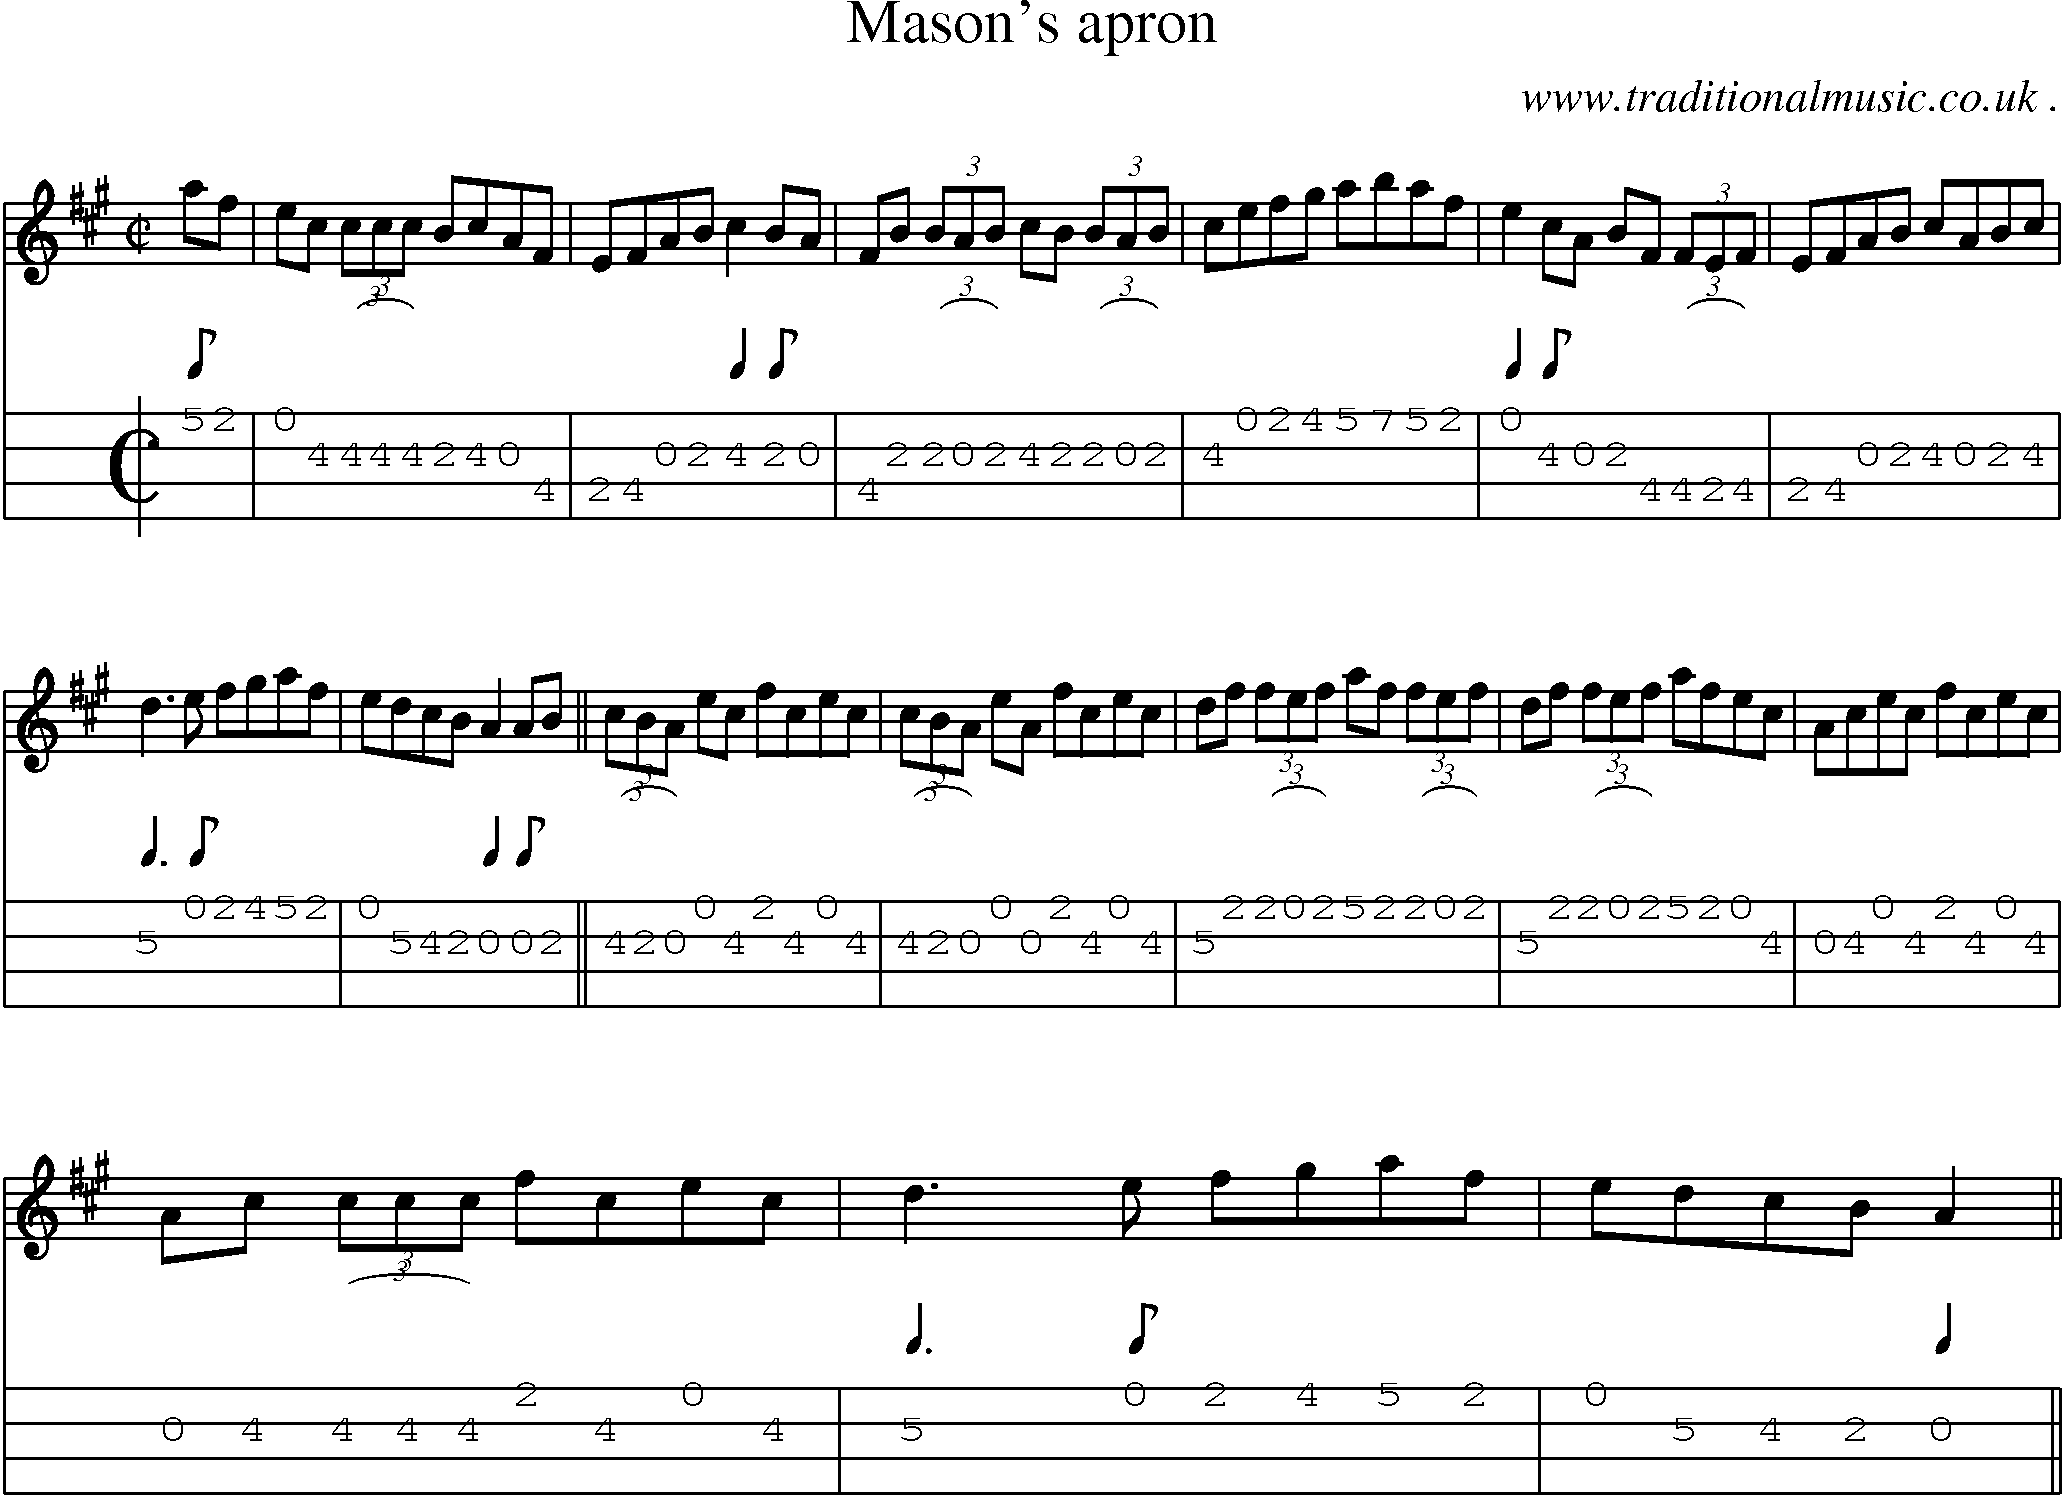 Sheet-Music and Mandolin Tabs for Masons Apron